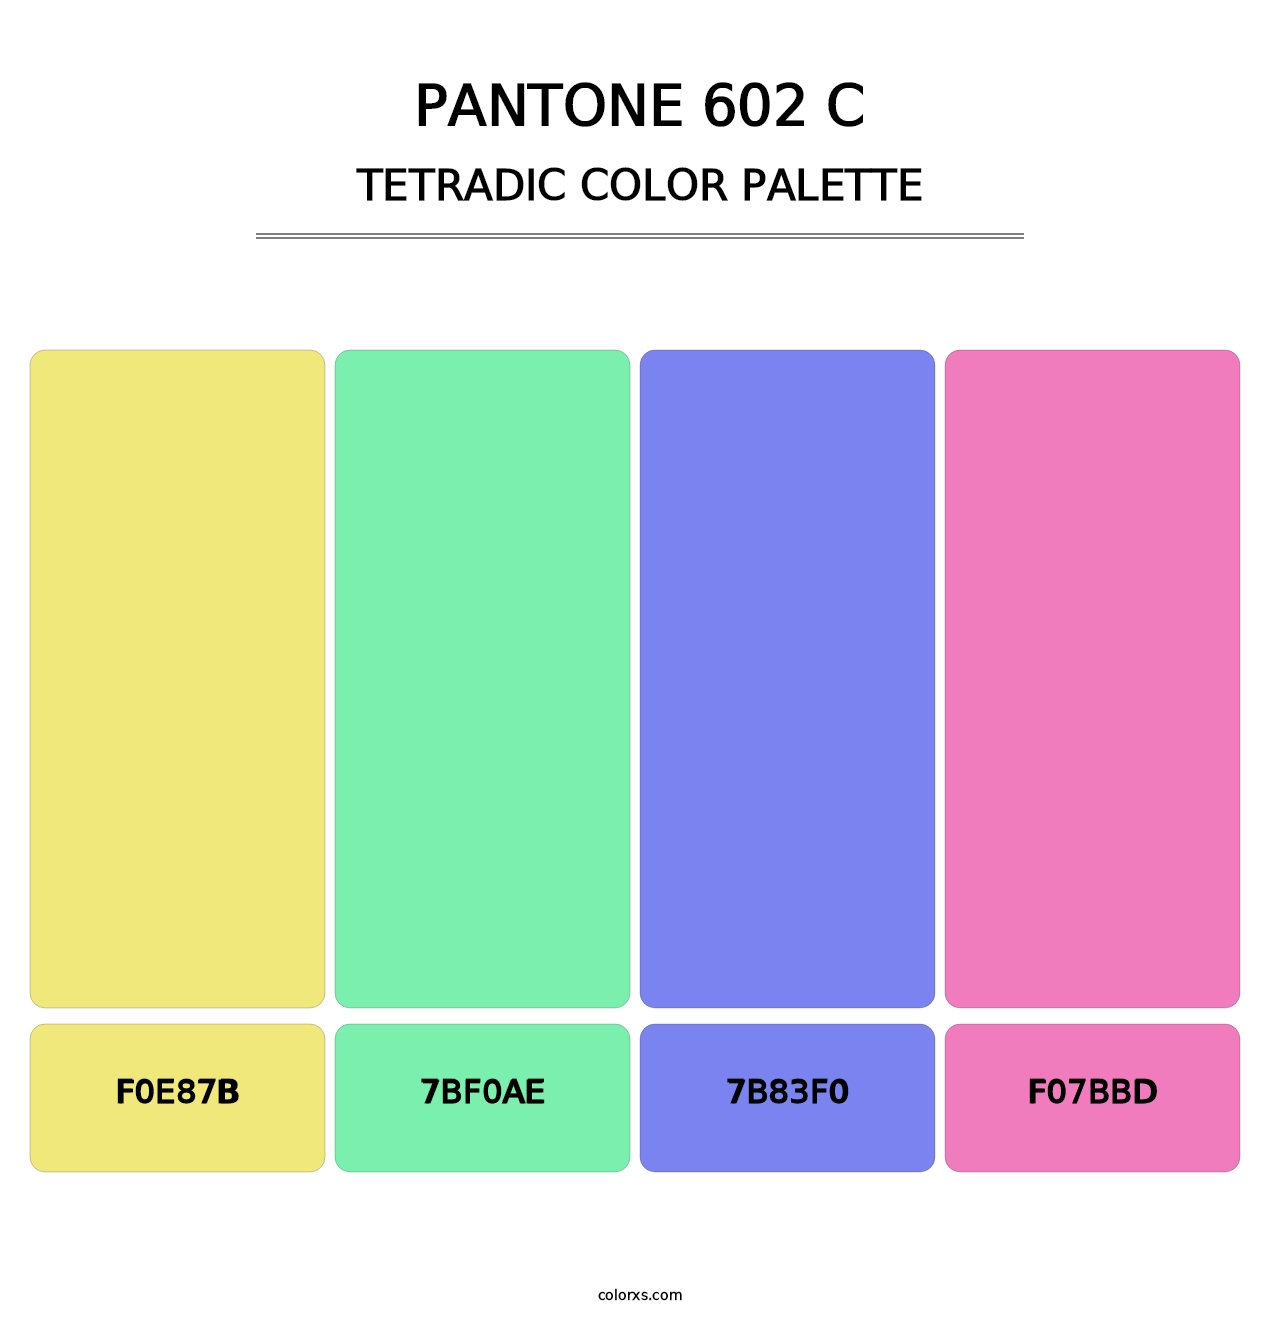 PANTONE 602 C - Tetradic Color Palette